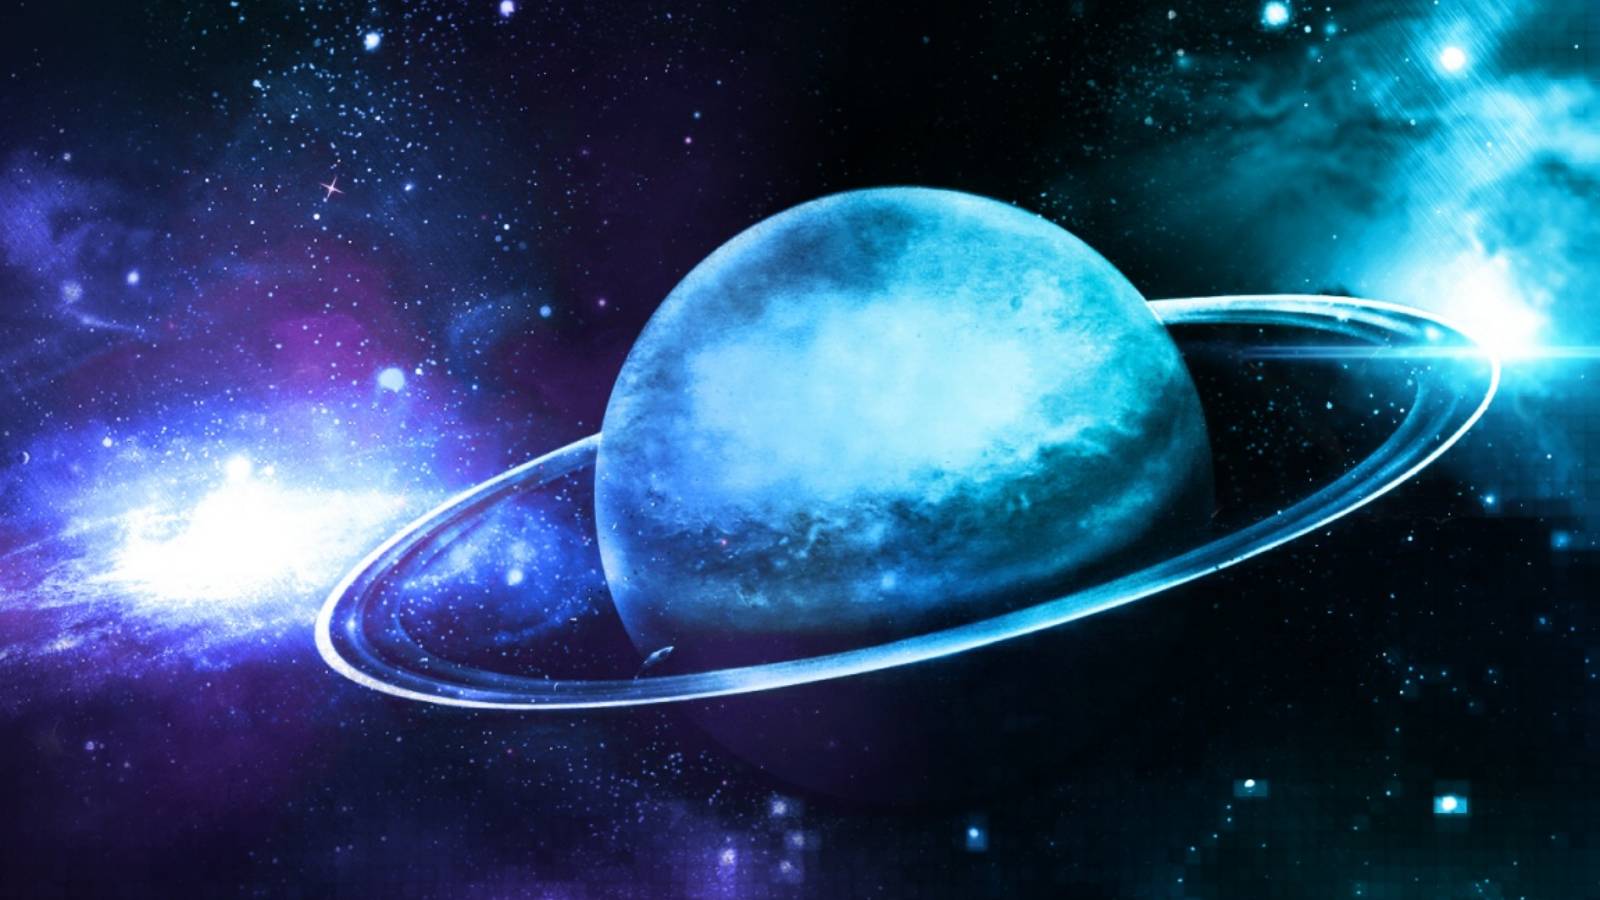 Planeta Uranus pamant